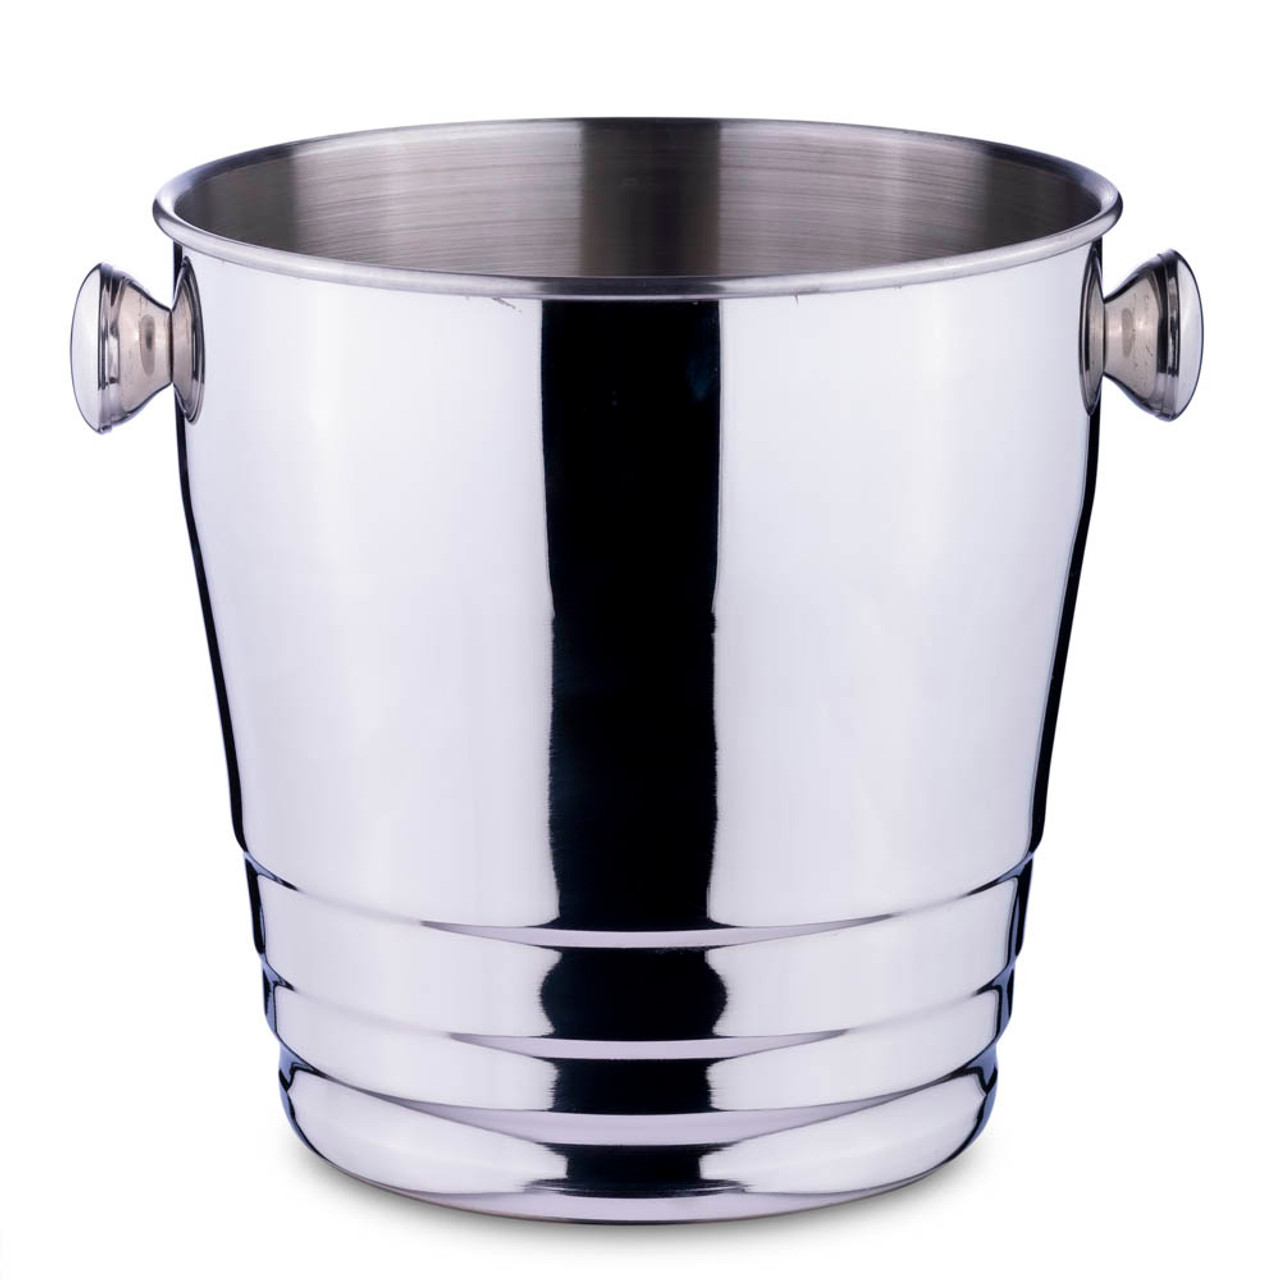 10-Qt. Stainless Steel Restaurant Bowl | Crate & Barrel